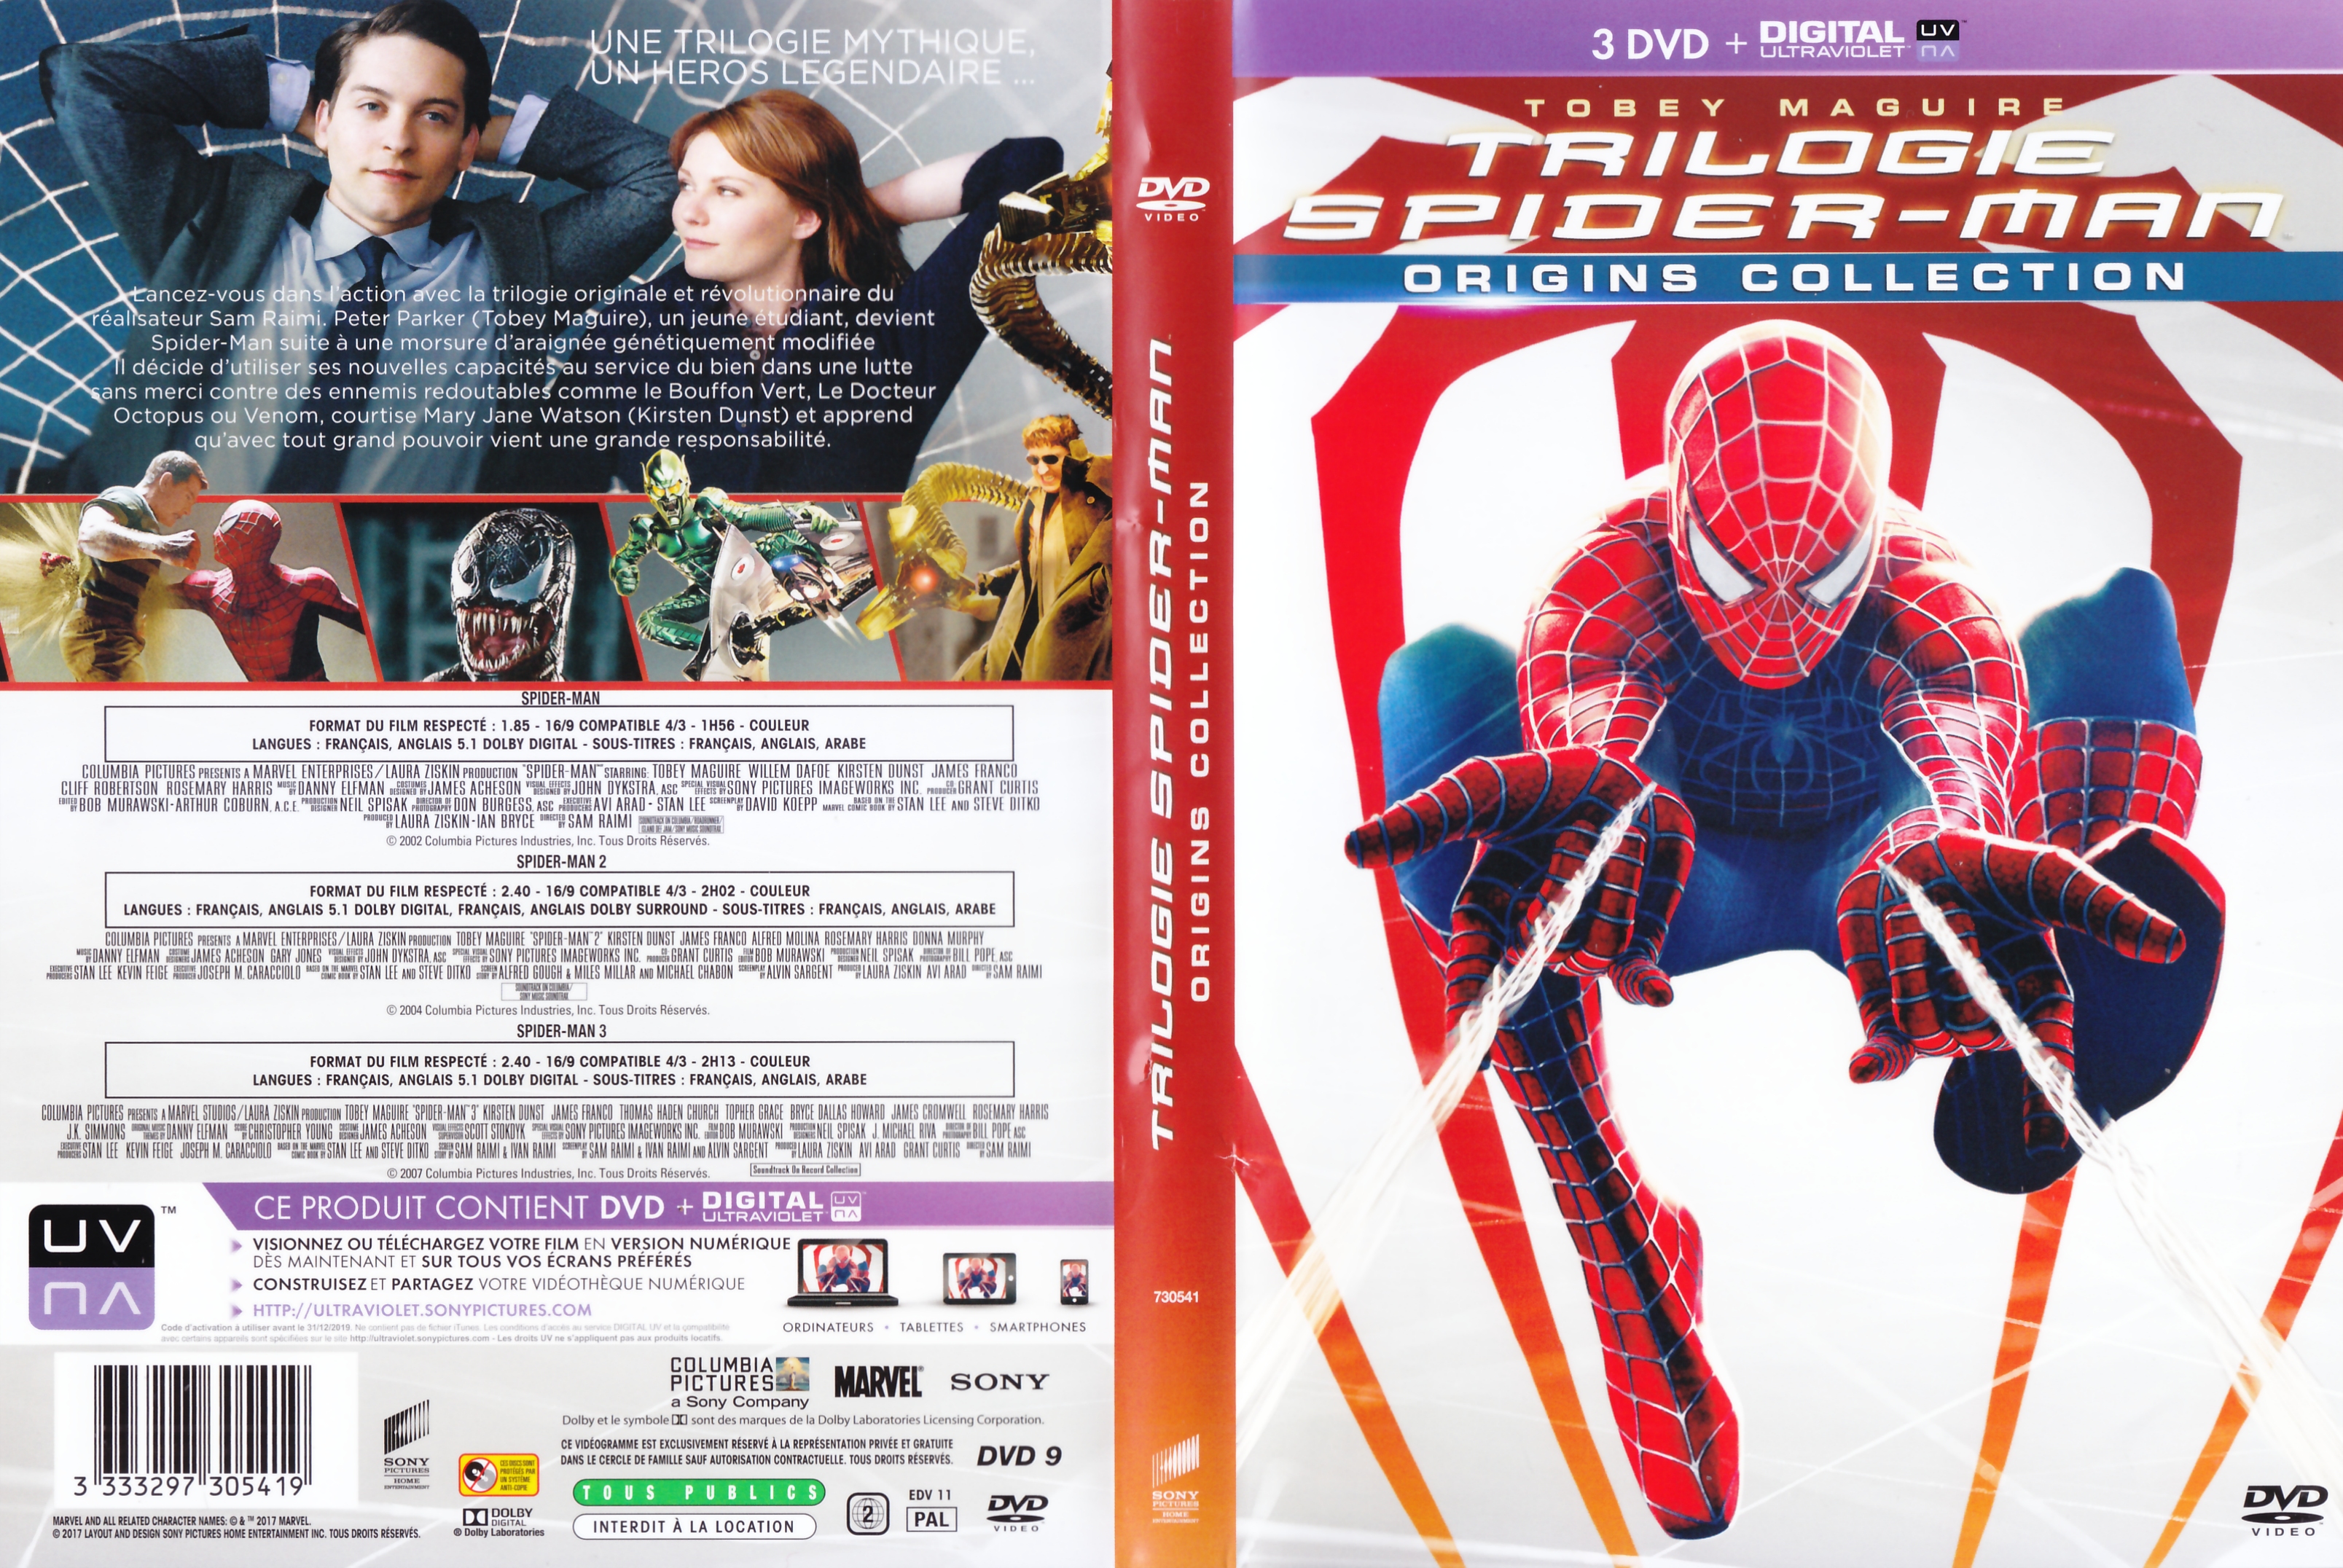 Jaquette DVD Trilogie Spider-man